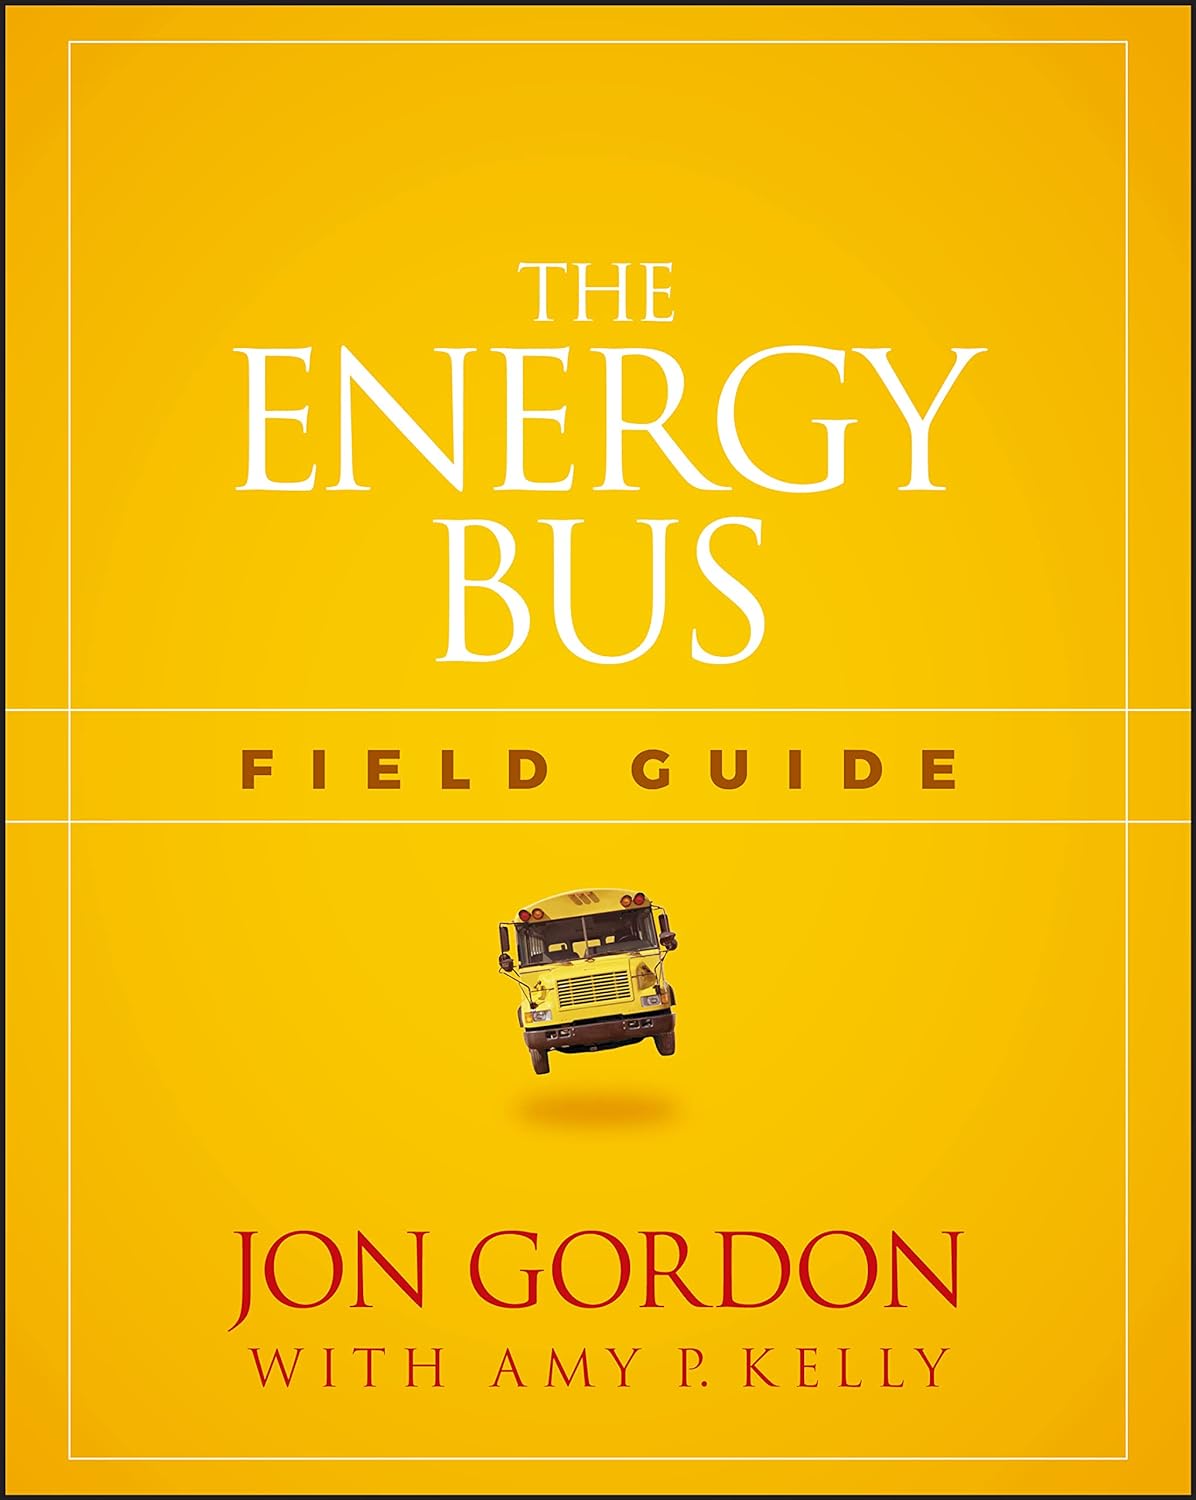 Jon Gordon with Amy P. Kelly - The Energy Bus Field Guide (Jon Gordon)